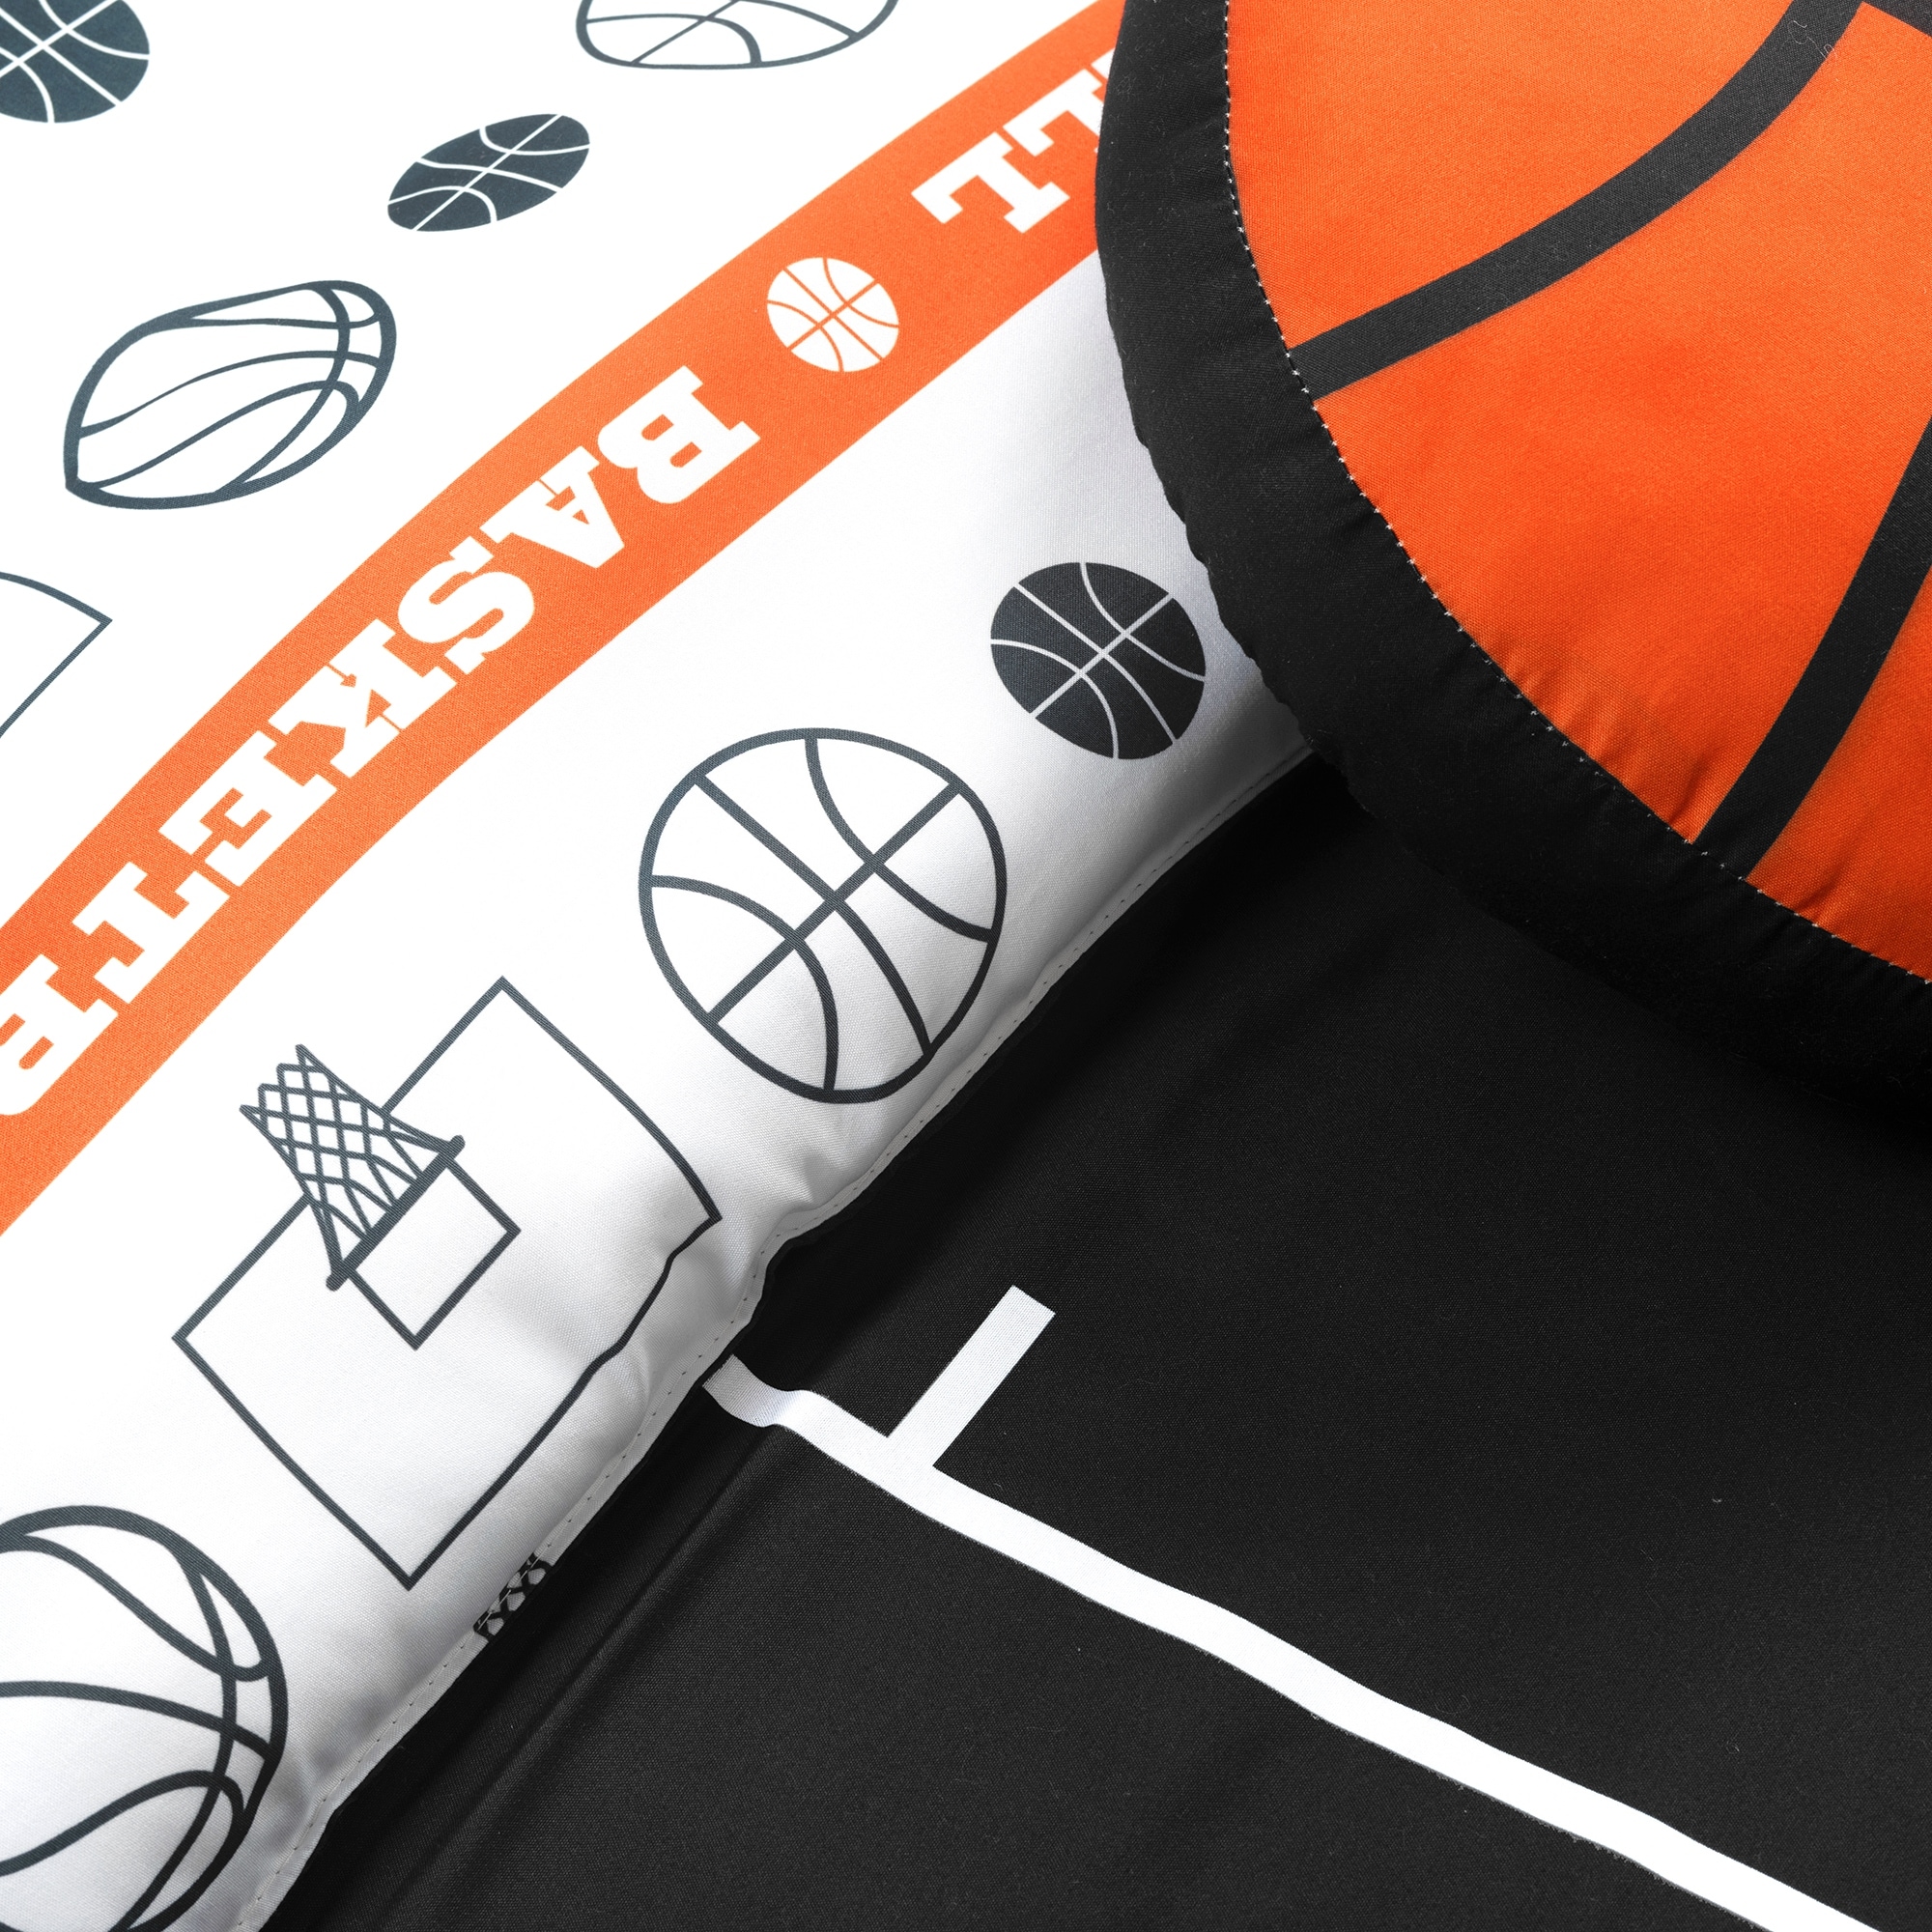 Lush Decor Basketball Game Reversible Oversized Comforter Set - On Sale -  Bed Bath & Beyond - 36178337